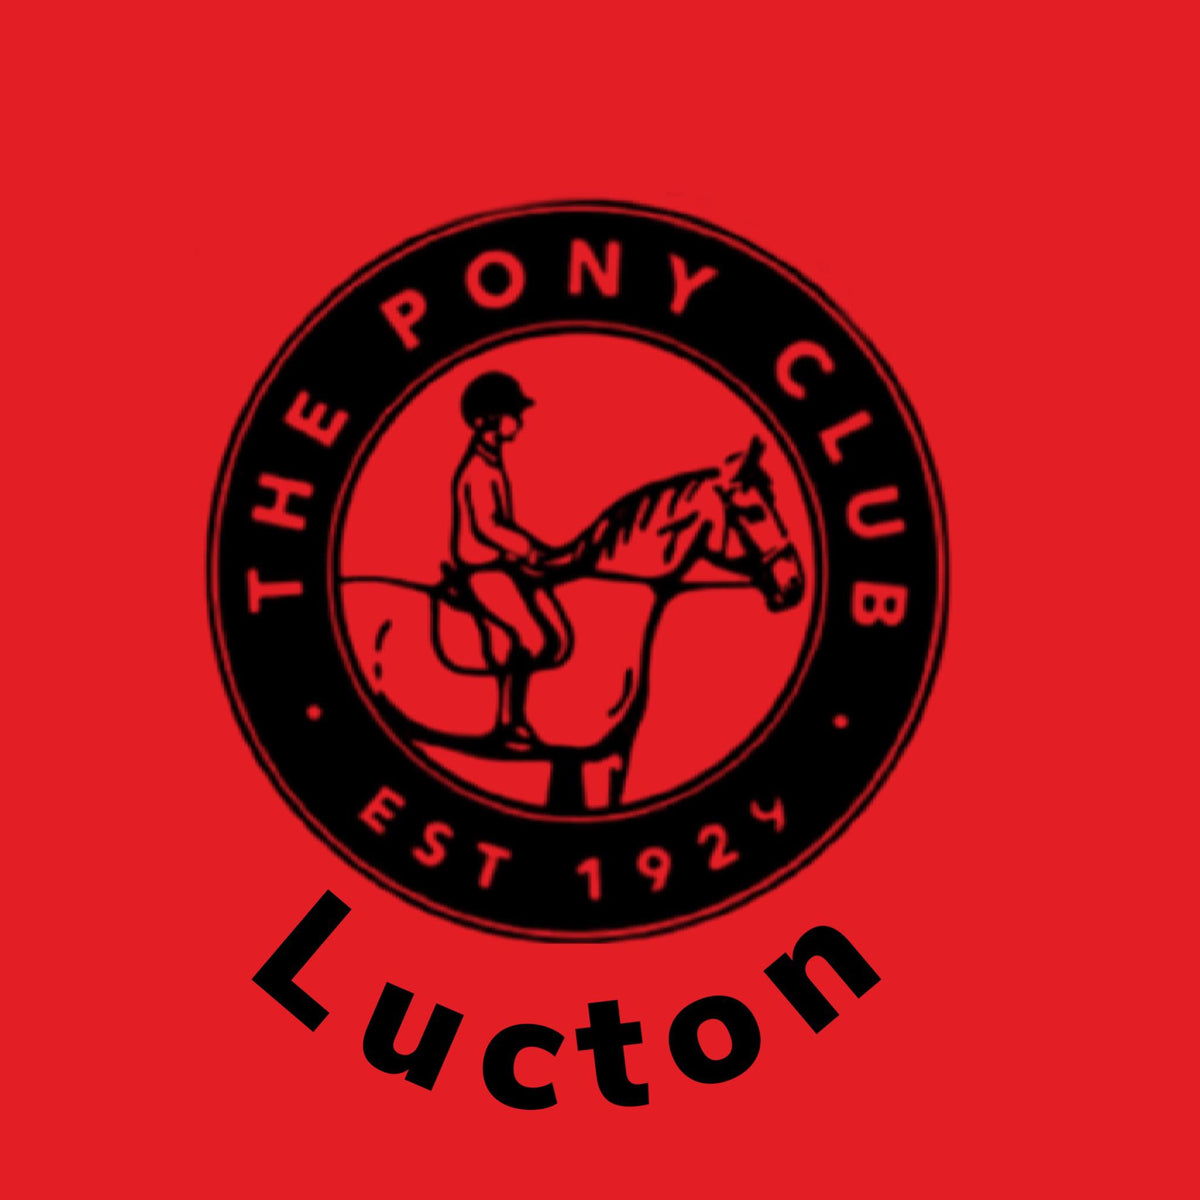 Lucton School & Equestrian Team